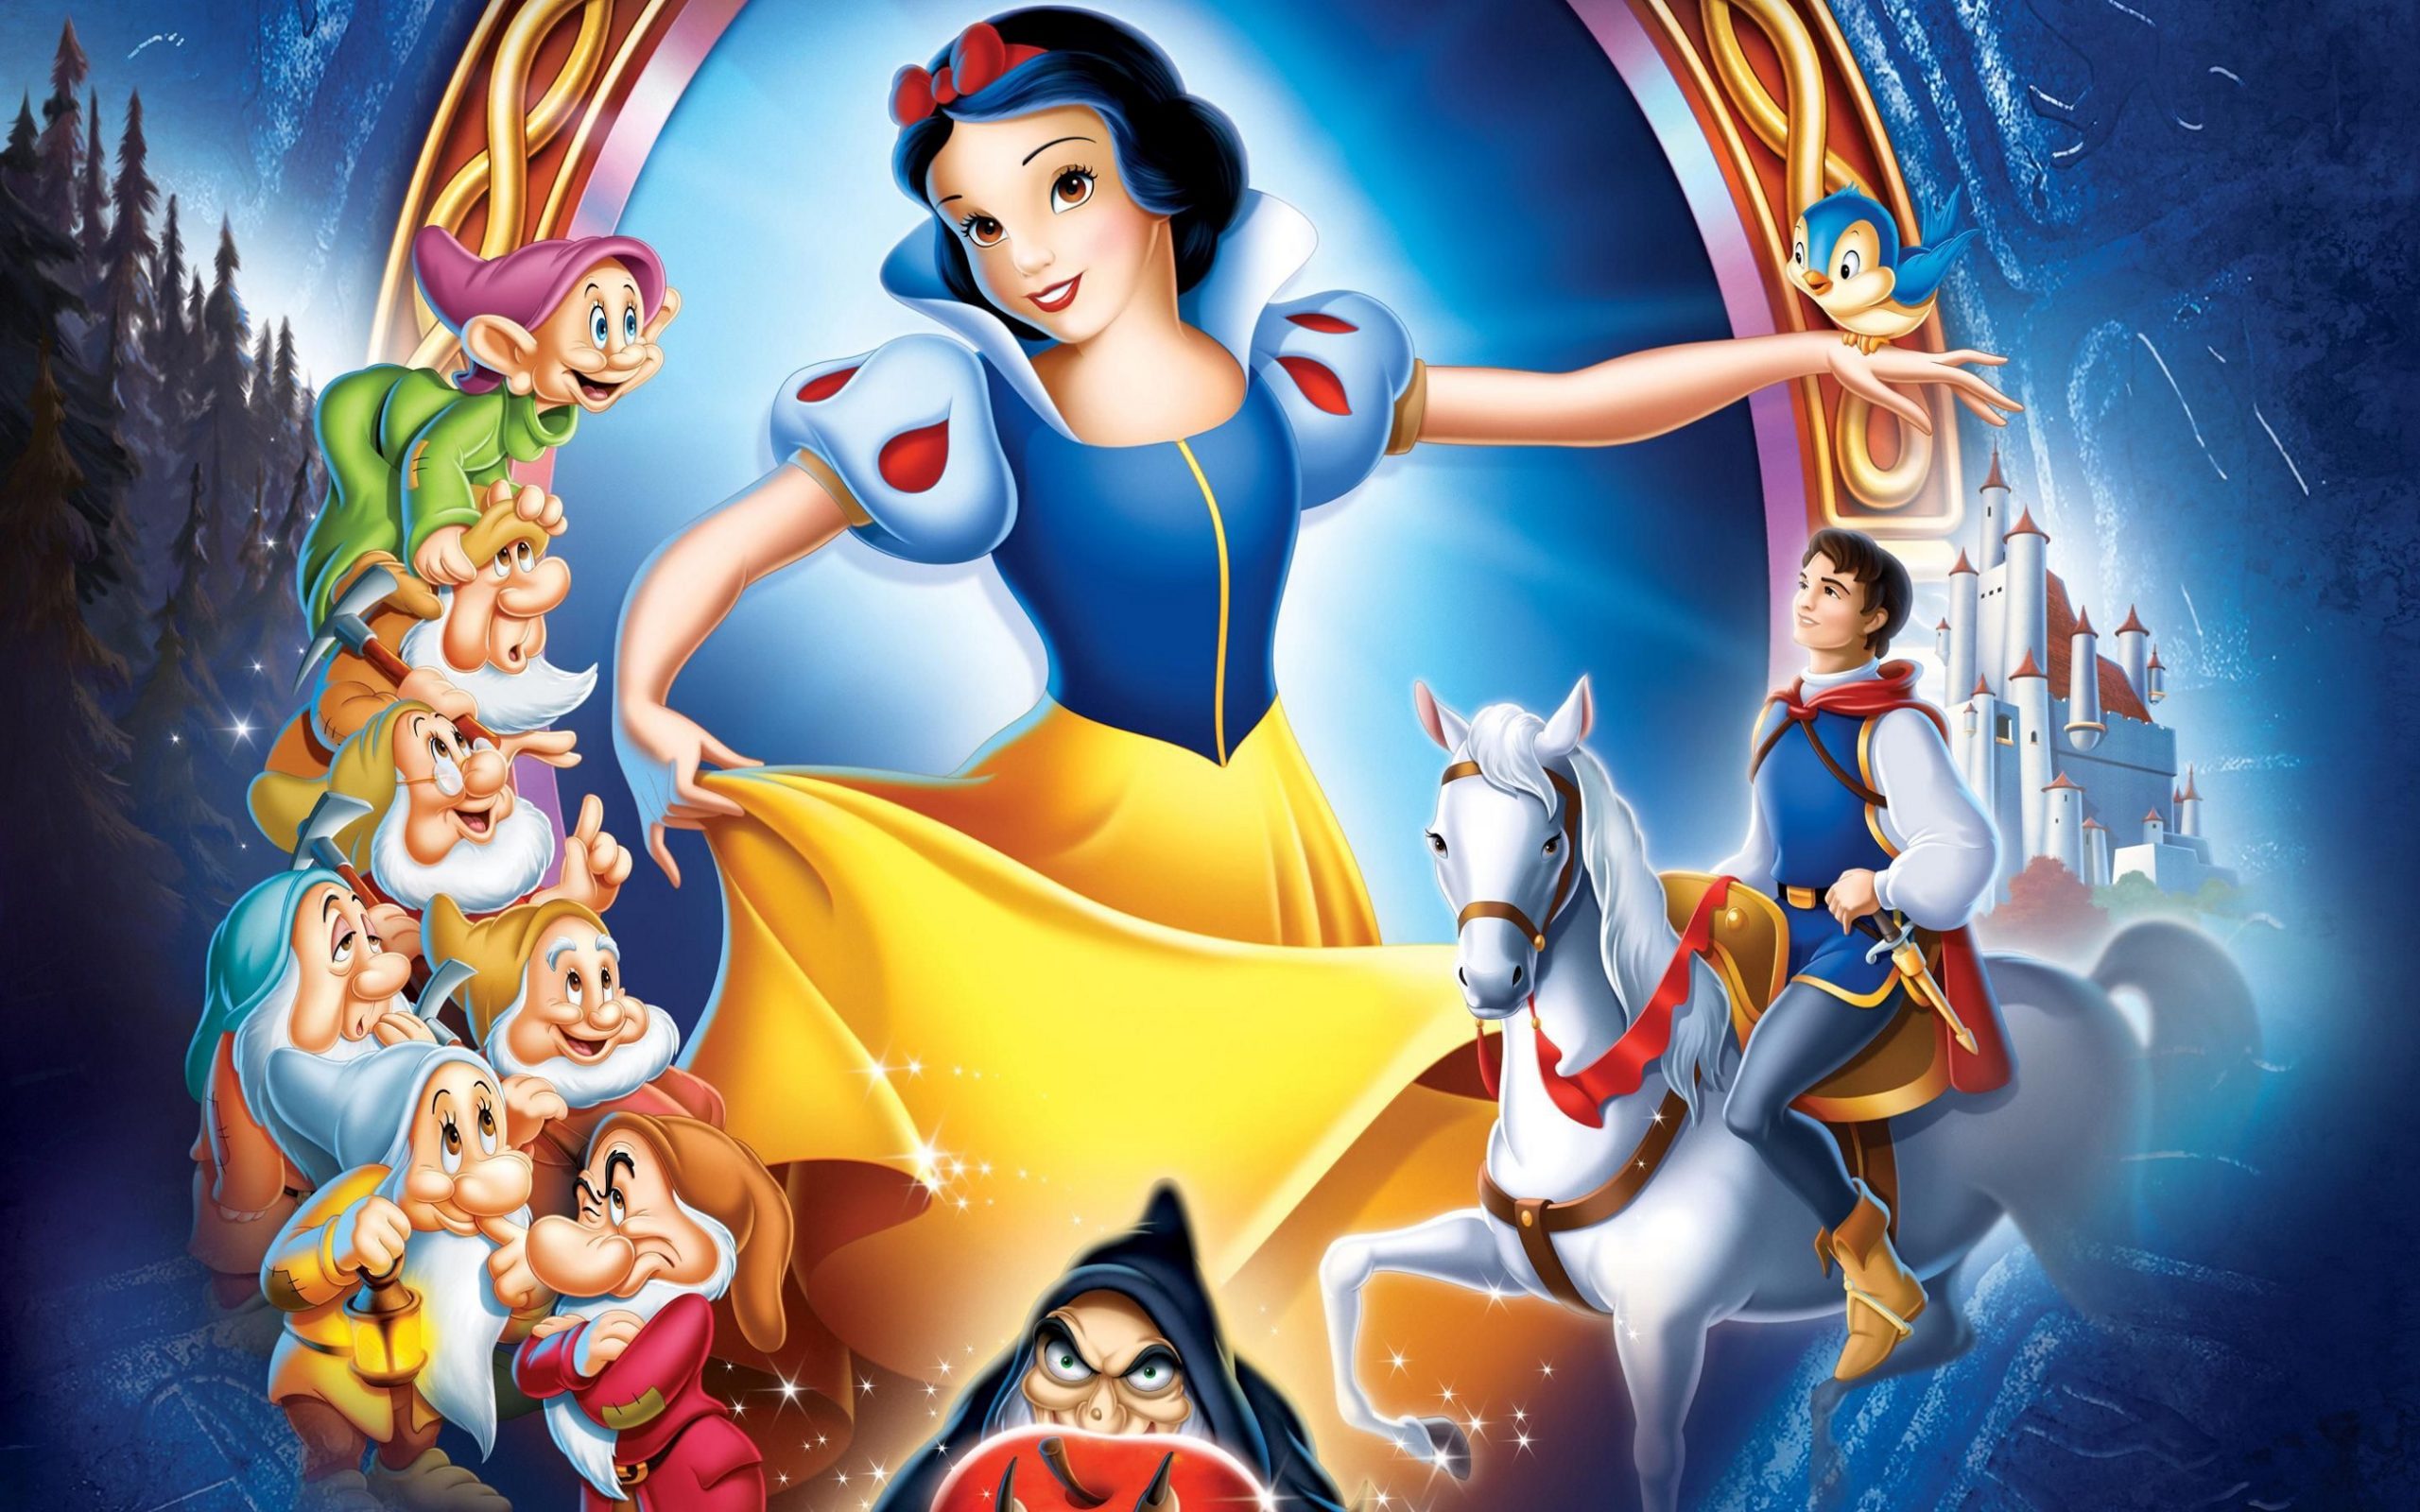 Snow White and the Seven Dwarfs Retro Review What's On Disney Plus